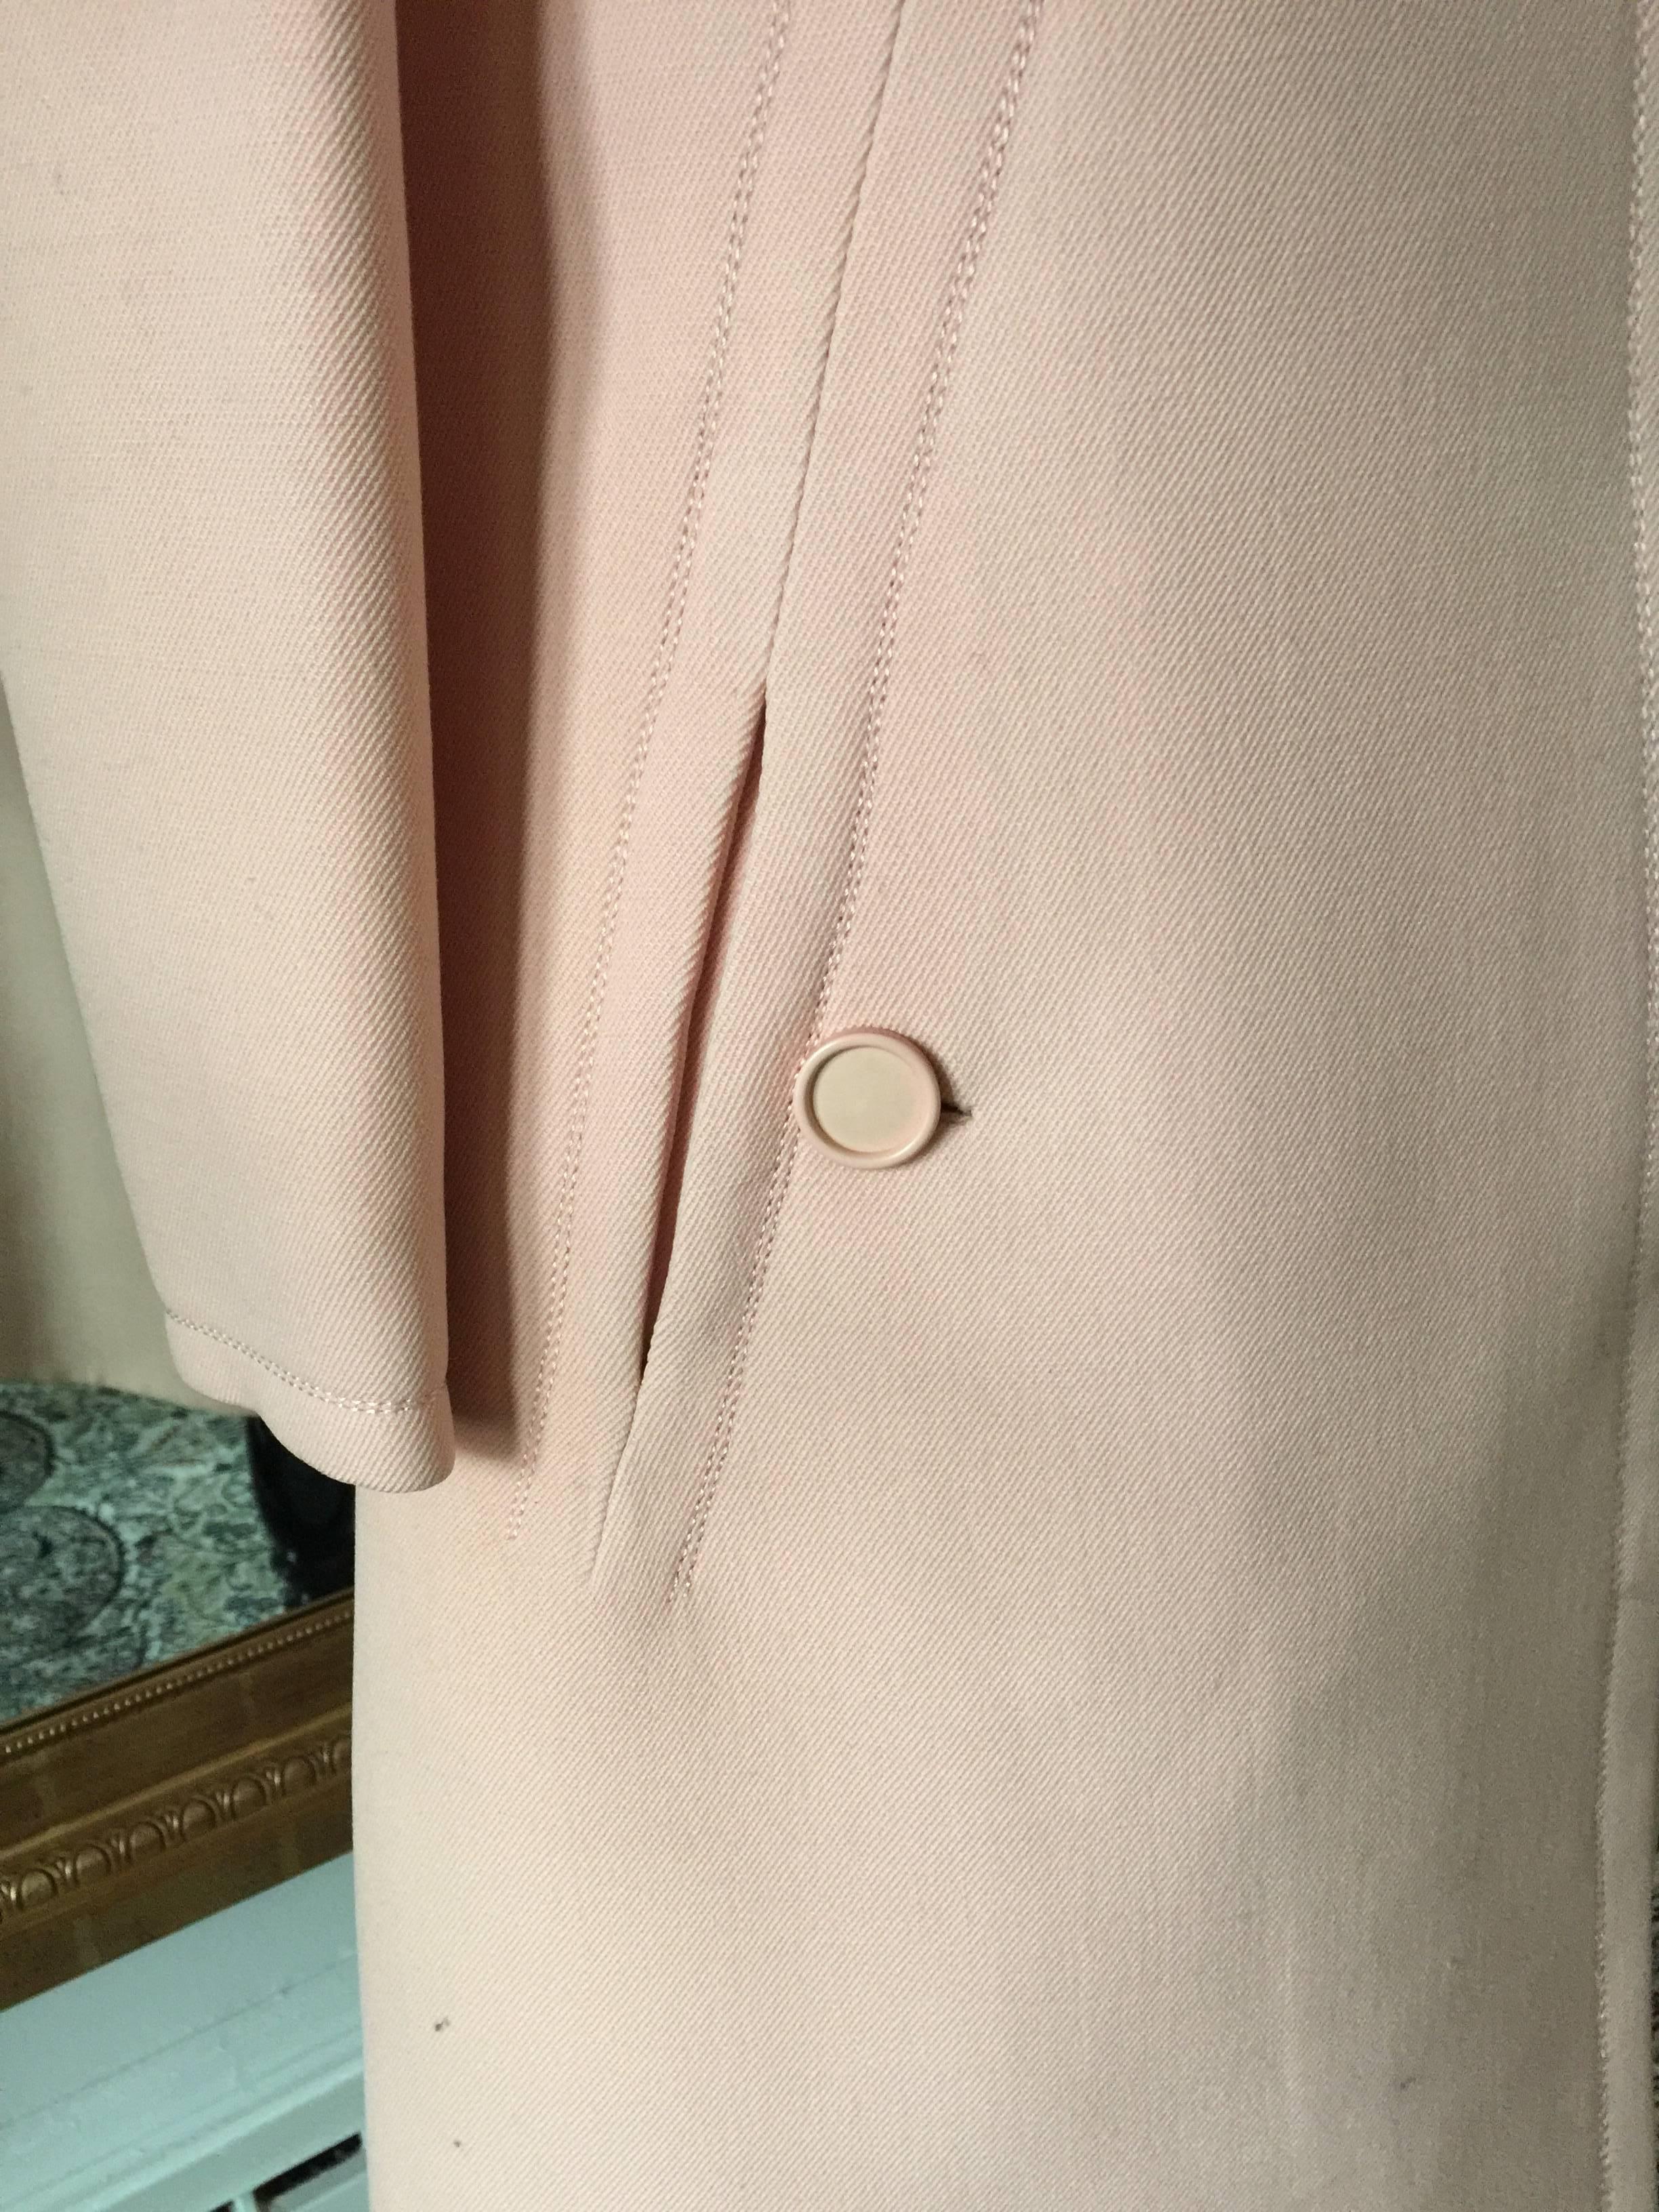 pink vintage coat